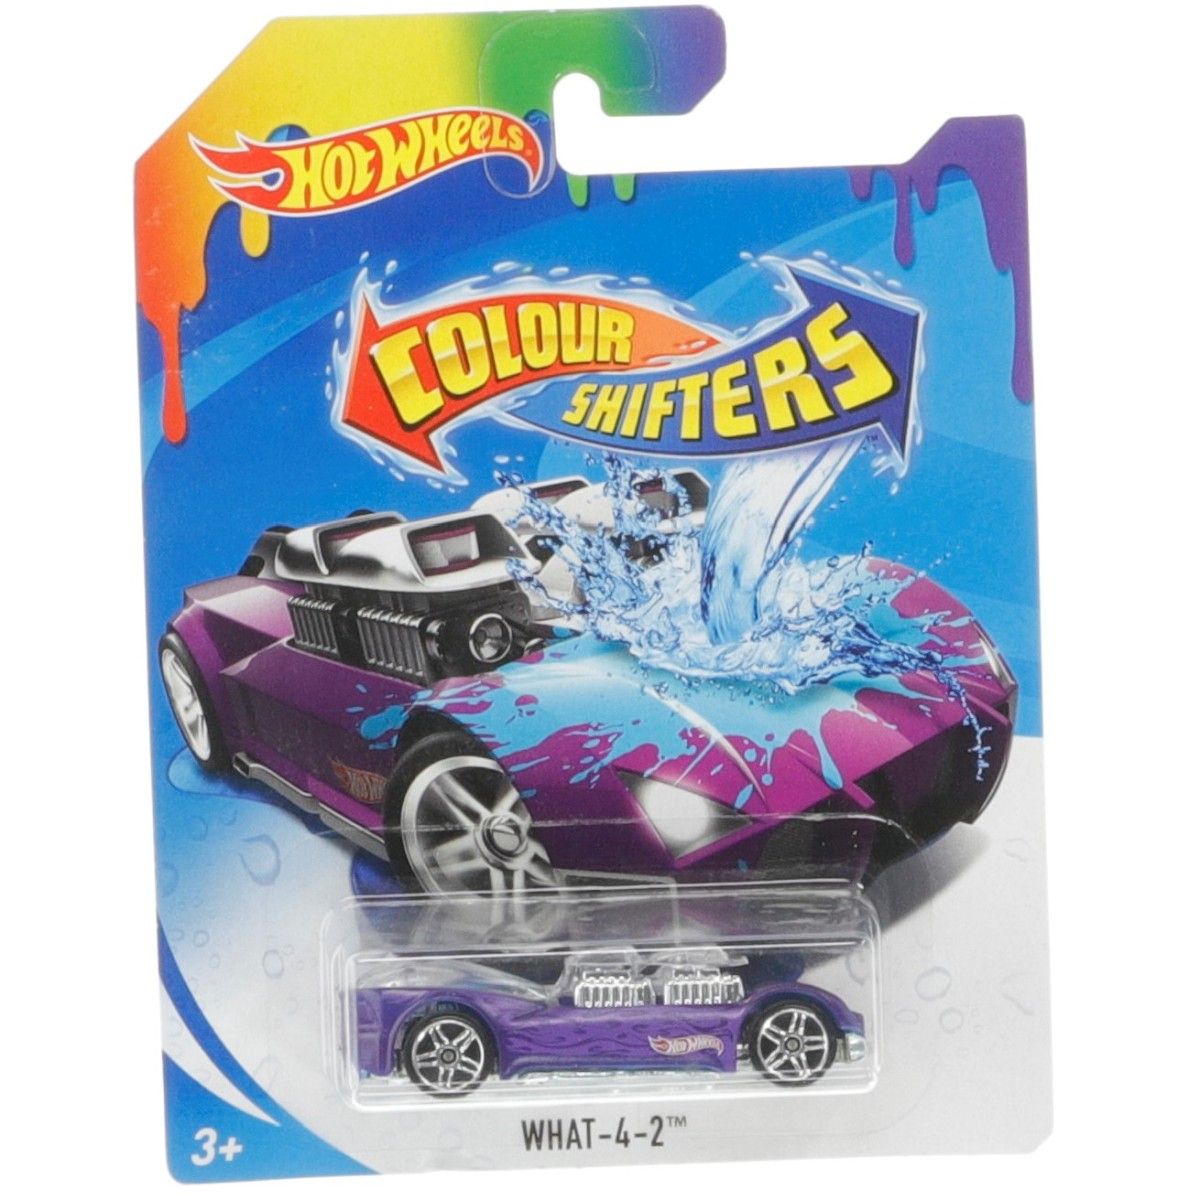 Samochód Mattel (BHR15)